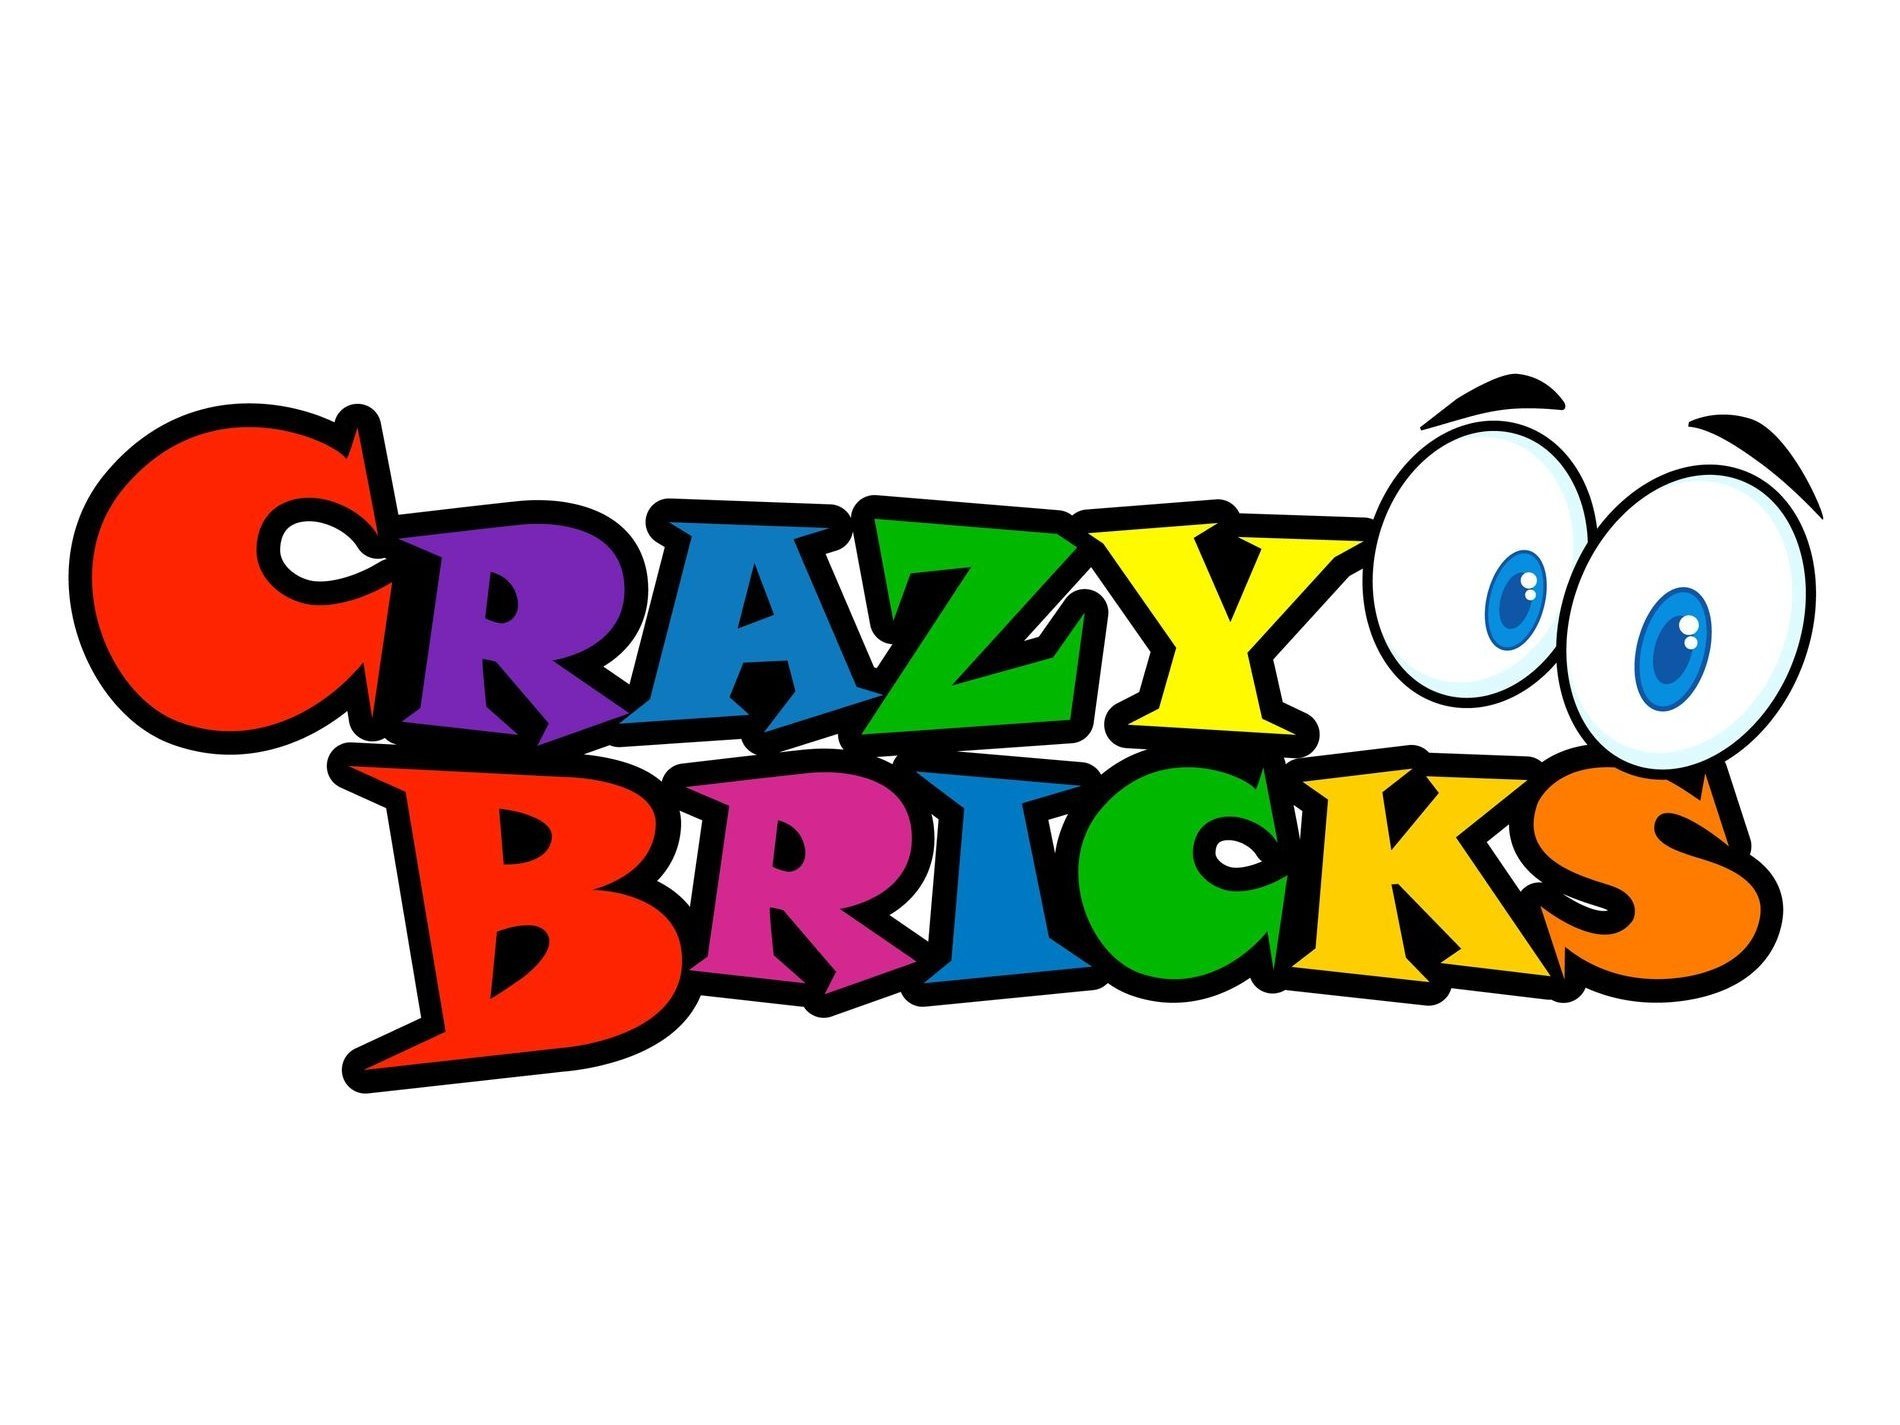 Crazy+Bricks+Logo+-+3x4.jpg